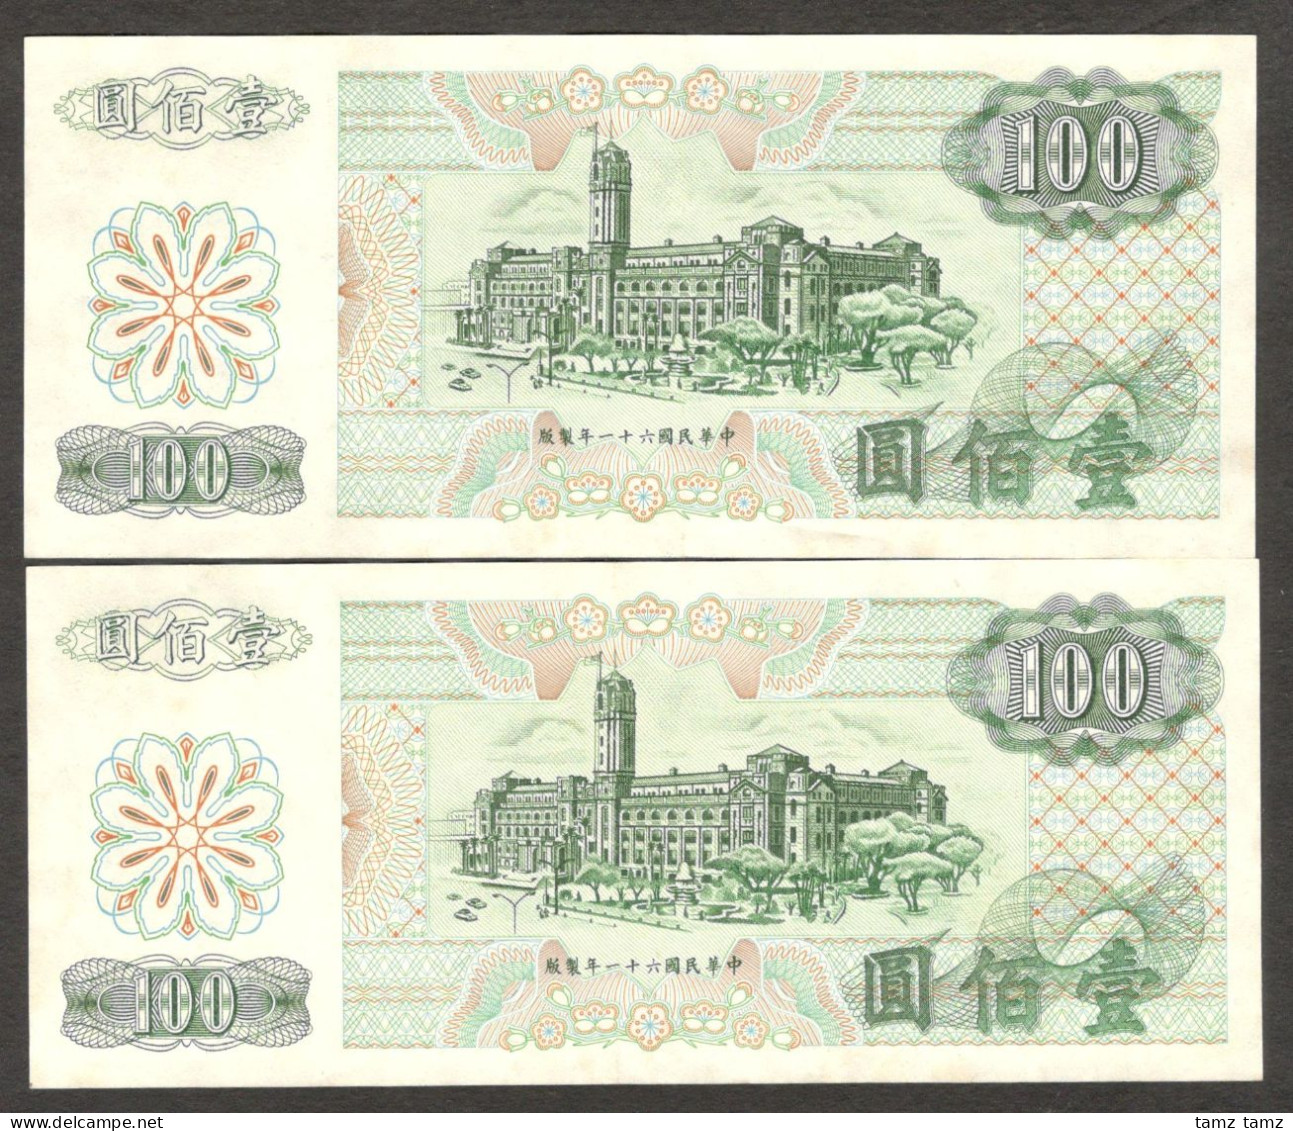 Lot 2 Pcs Taiwan 100 Dollars Sun Yat Sen P-1983 1972 (Year 61) XF - Taiwan